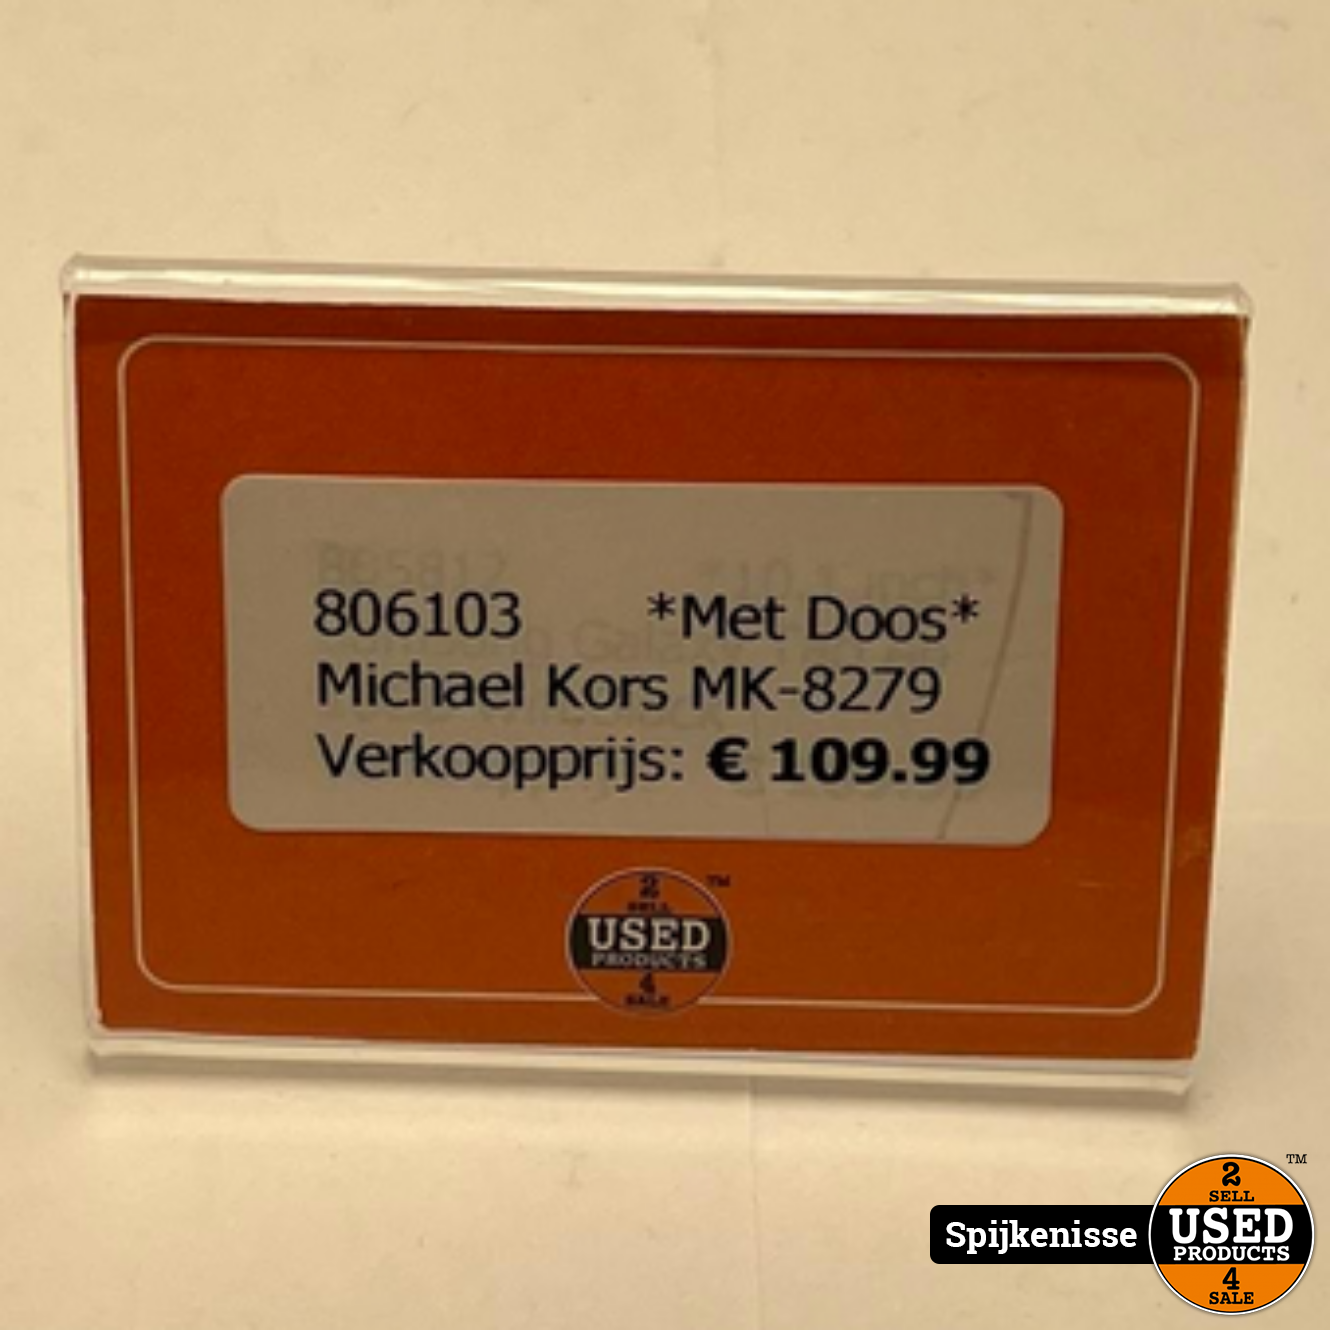 Michael Kors MK-8279 Horloge MET DOOS *806103* - Used Products Spijkenisse